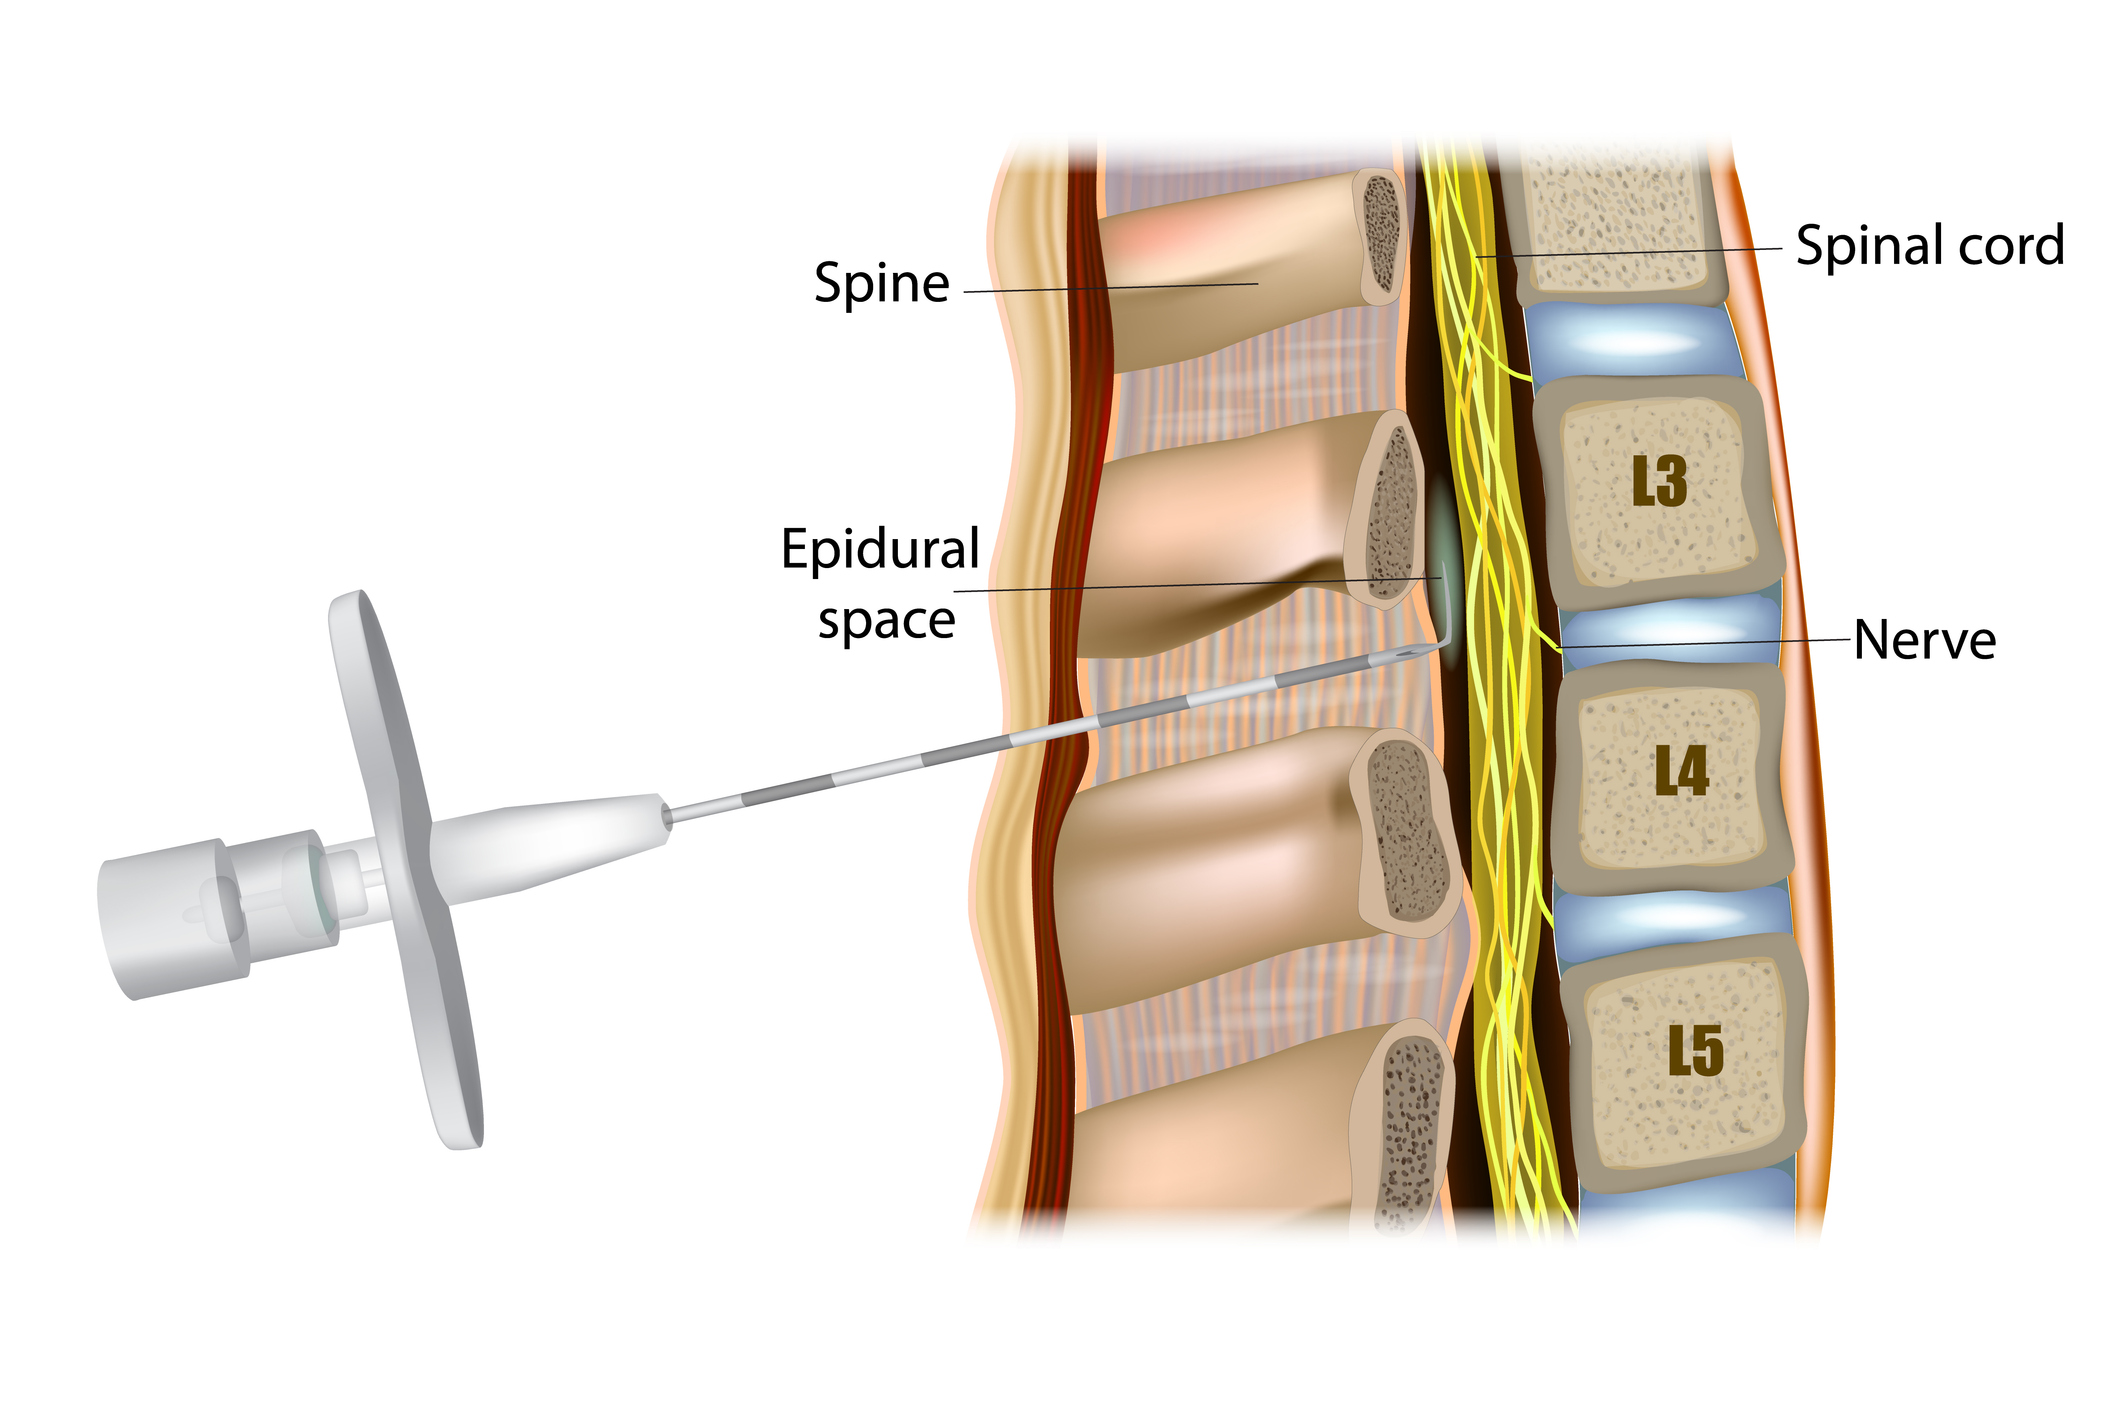 Lumbar Epidural Steroid Injection (Lumbar ESI)